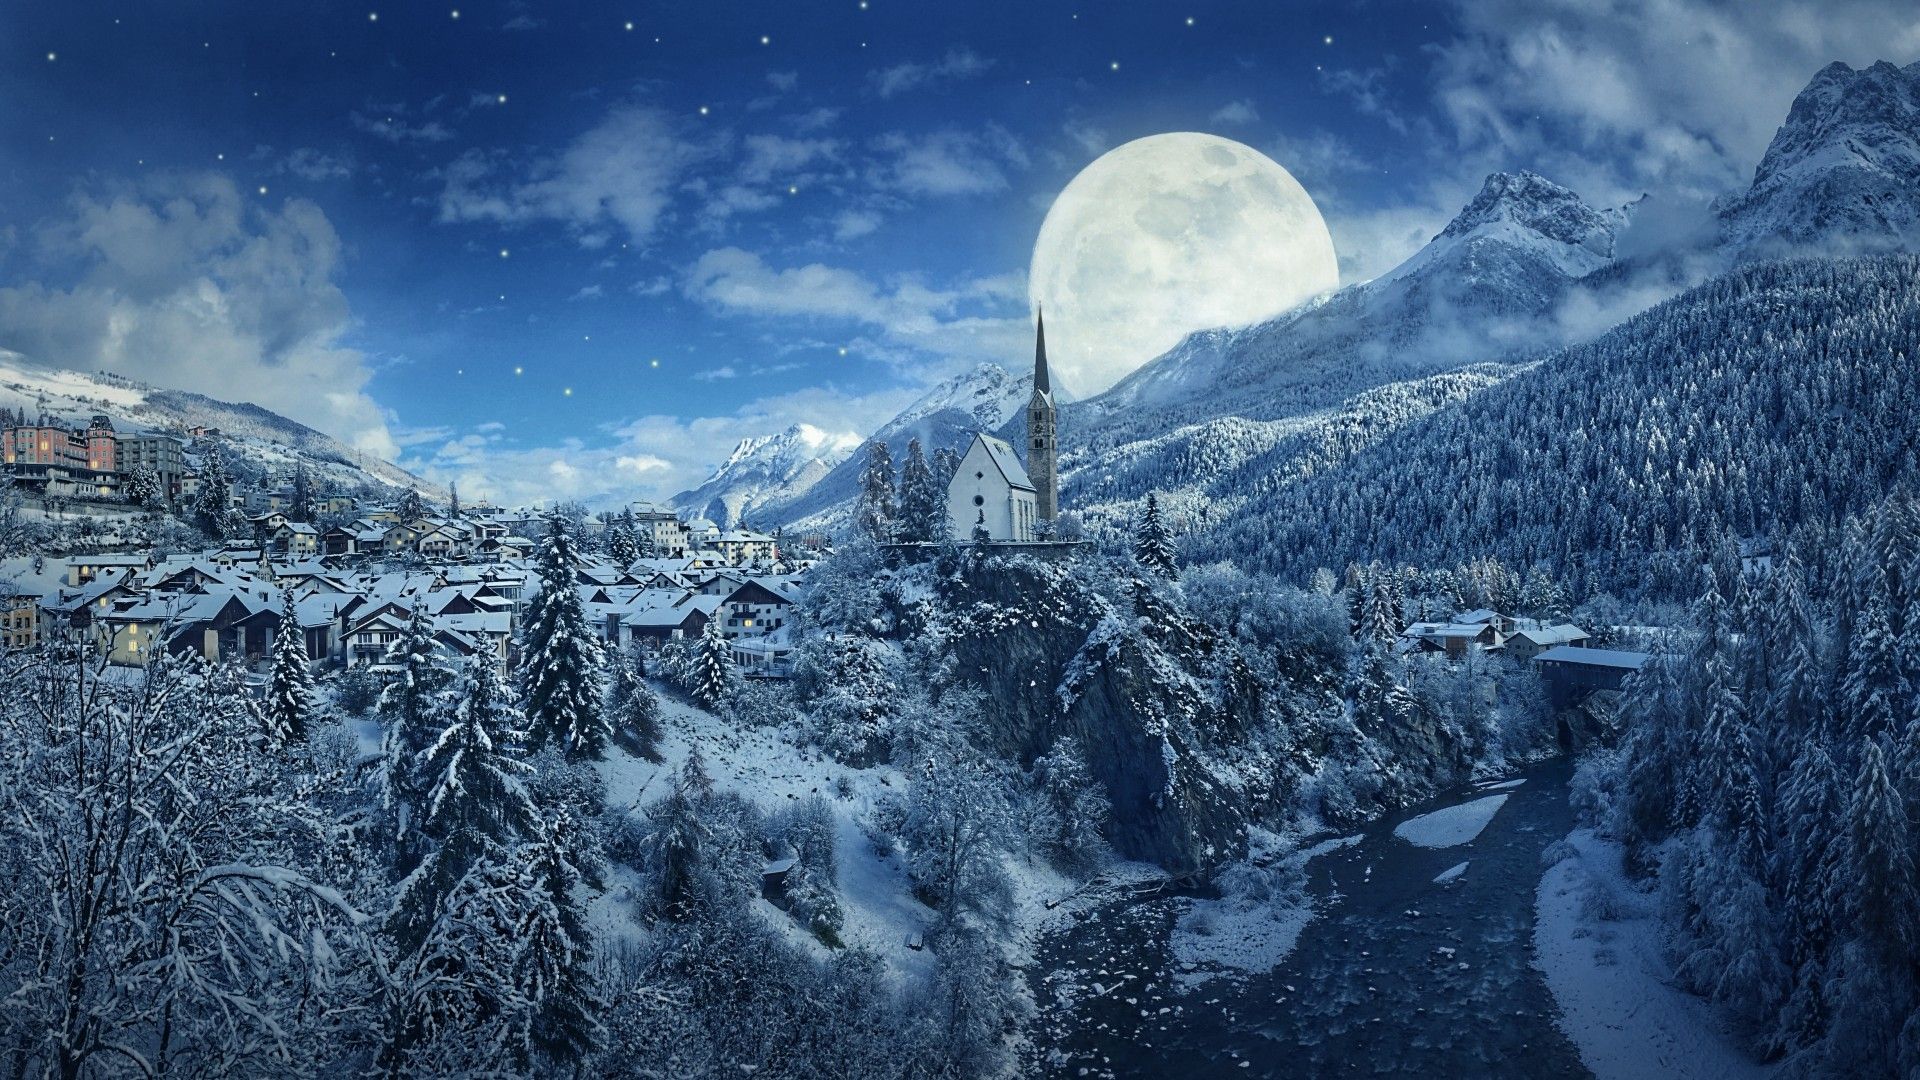 Winter 4K Wallpaper, Moon, Frozen, Forest, Village, Snowfall, 5K, Nature